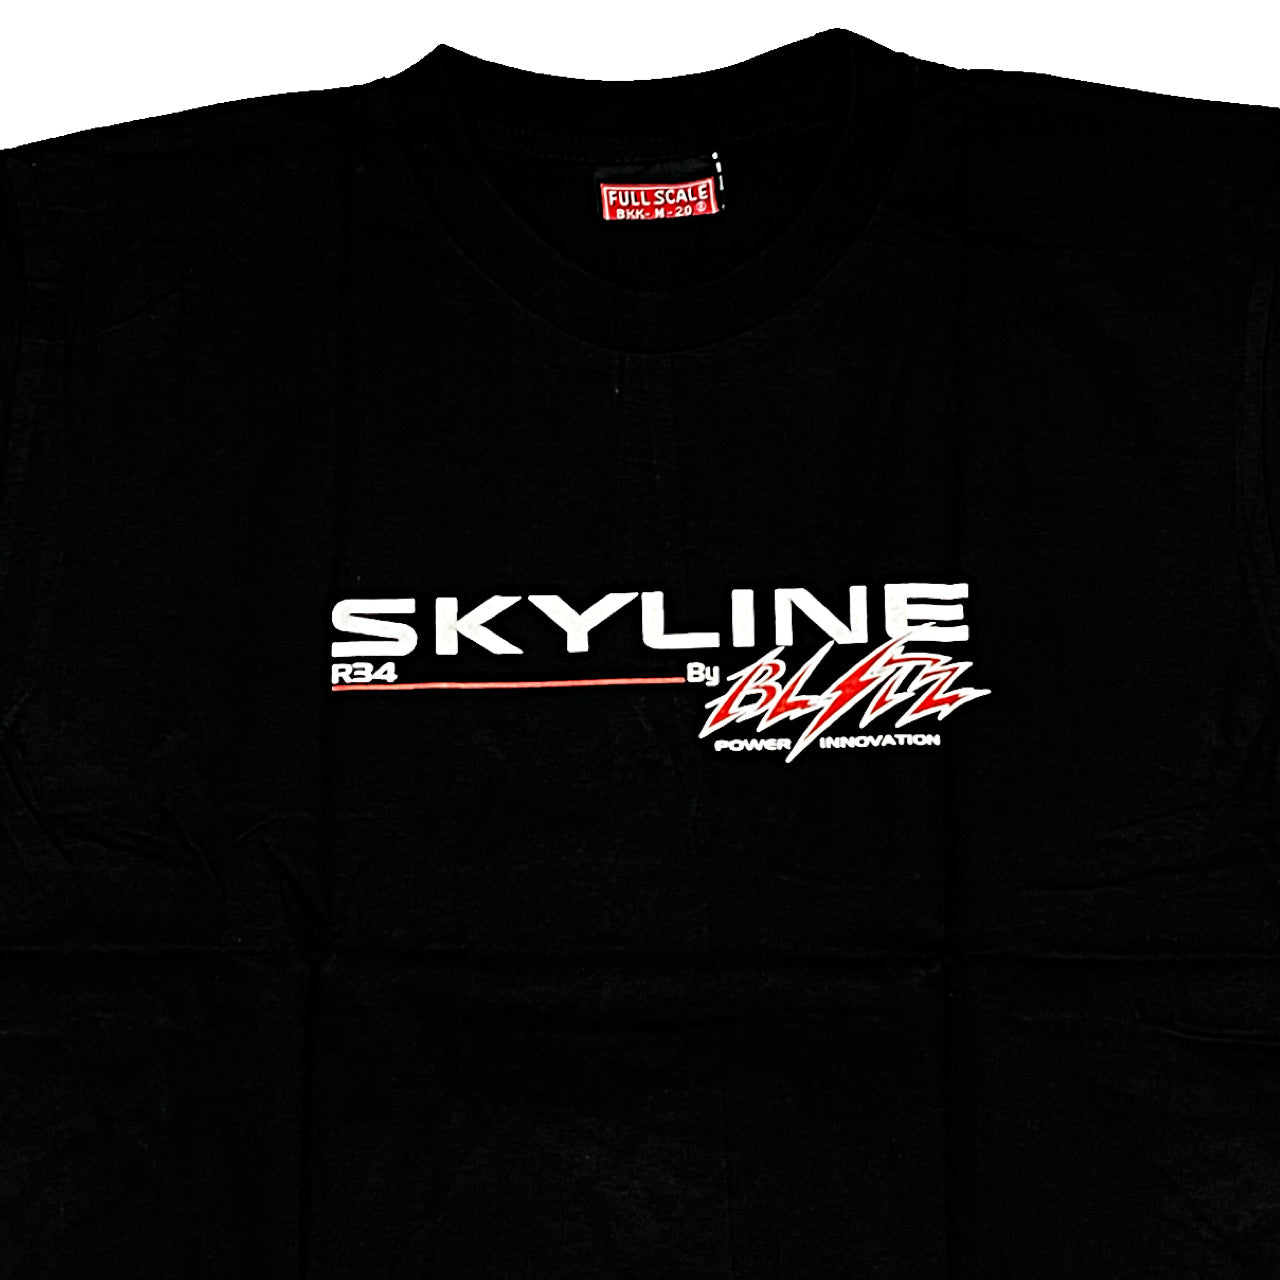 Blitz Nissan Skyline R34 GTR Power Innovation T-shirt Black